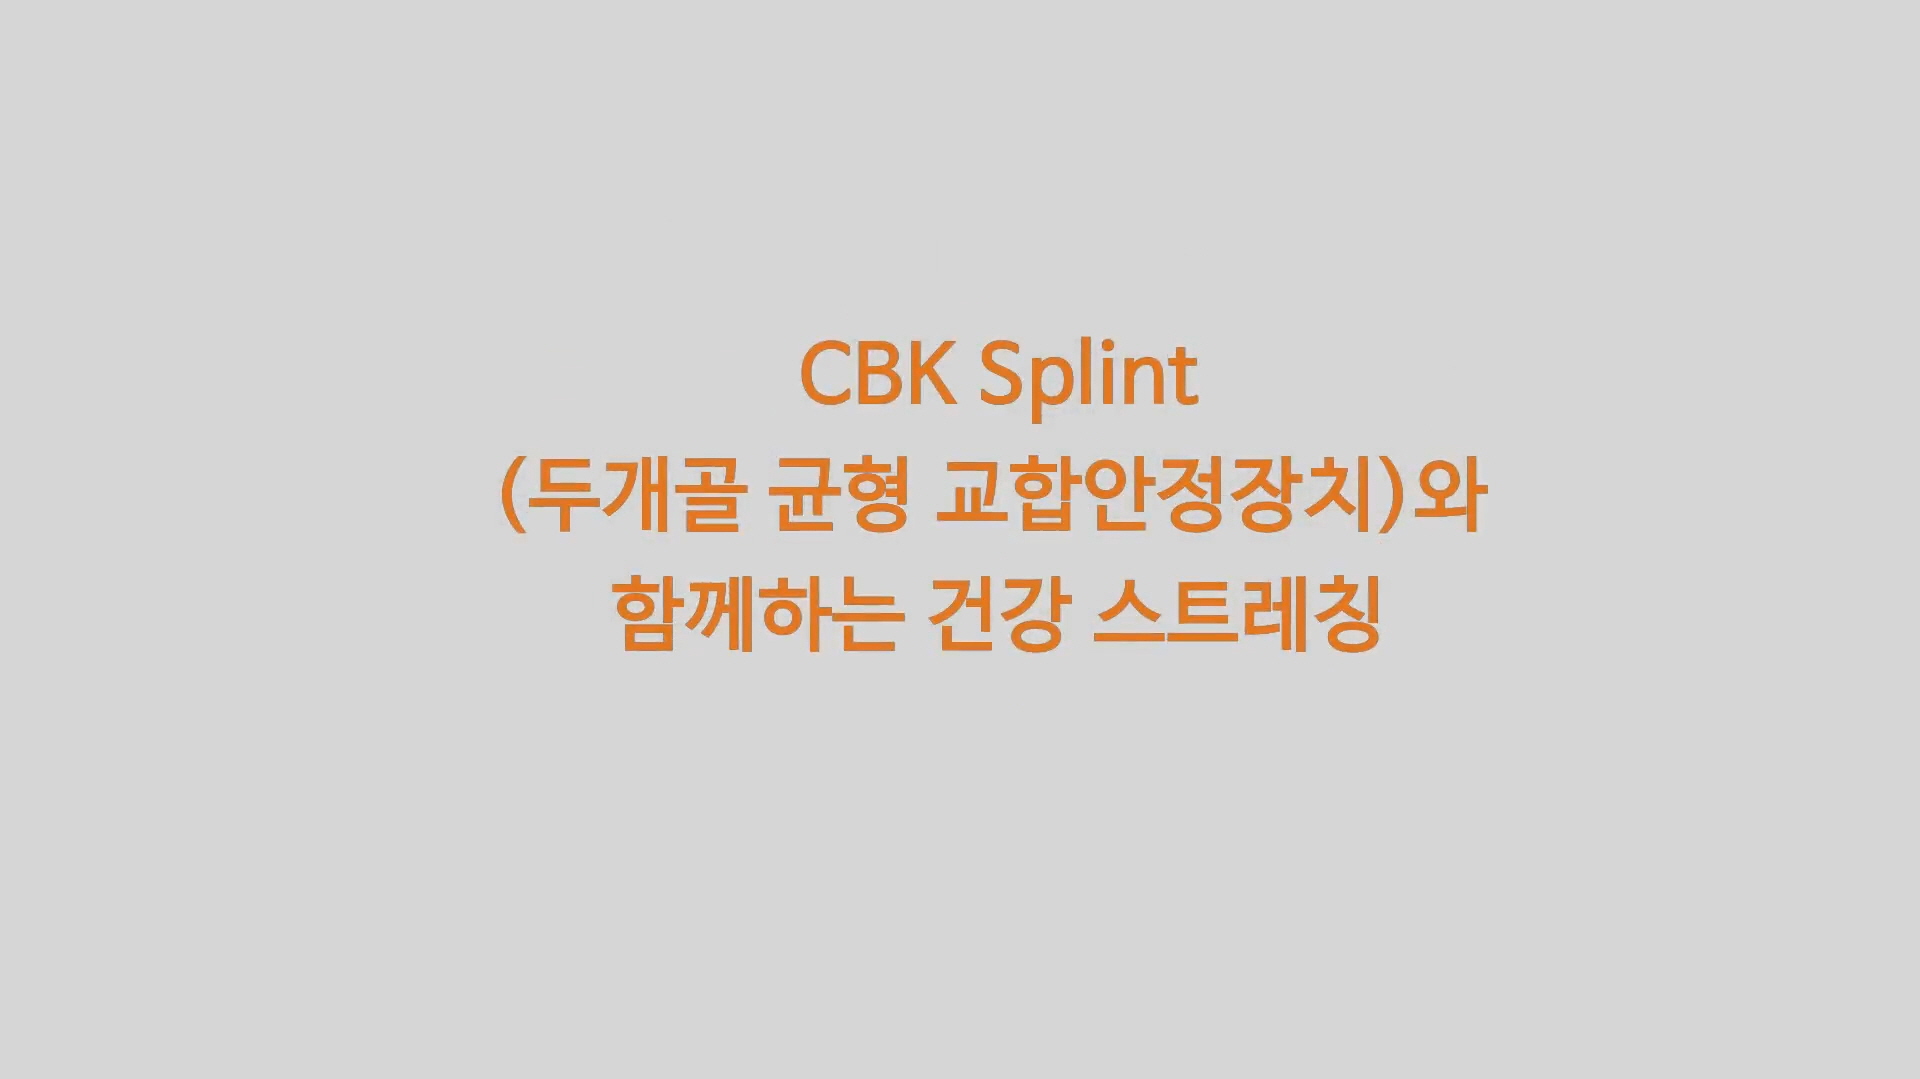 CBK Splint 와 함께하는 건강 스트레칭